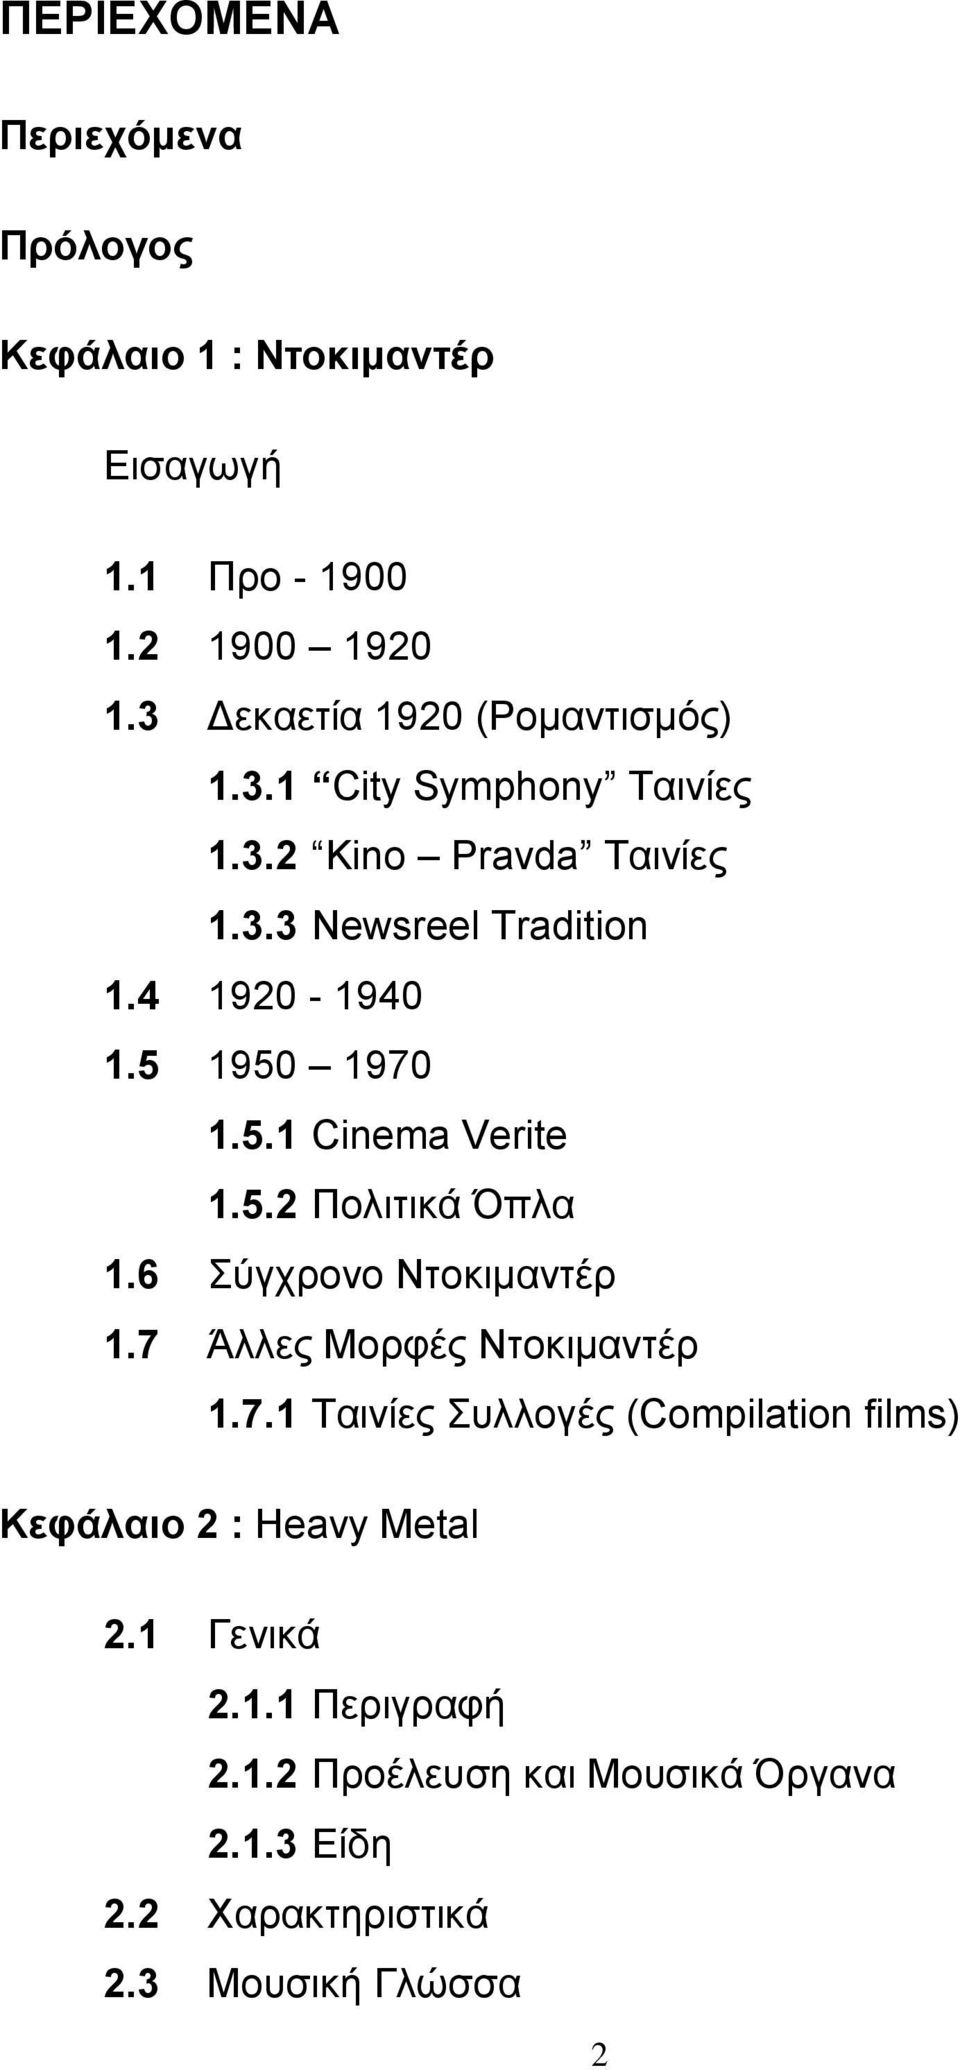 5 1950 1970 1.5.1 Cinema Verite 1.5.2 Πολιτικά Όπλα 1.6 Σύγχρονο Ντοκιµαντέρ 1.7 Άλλες Μορφές Ντοκιµαντέρ 1.7.1 Ταινίες Συλλογές (Compilation films) Κεφάλαιο 2 : Heavy Metal 2.